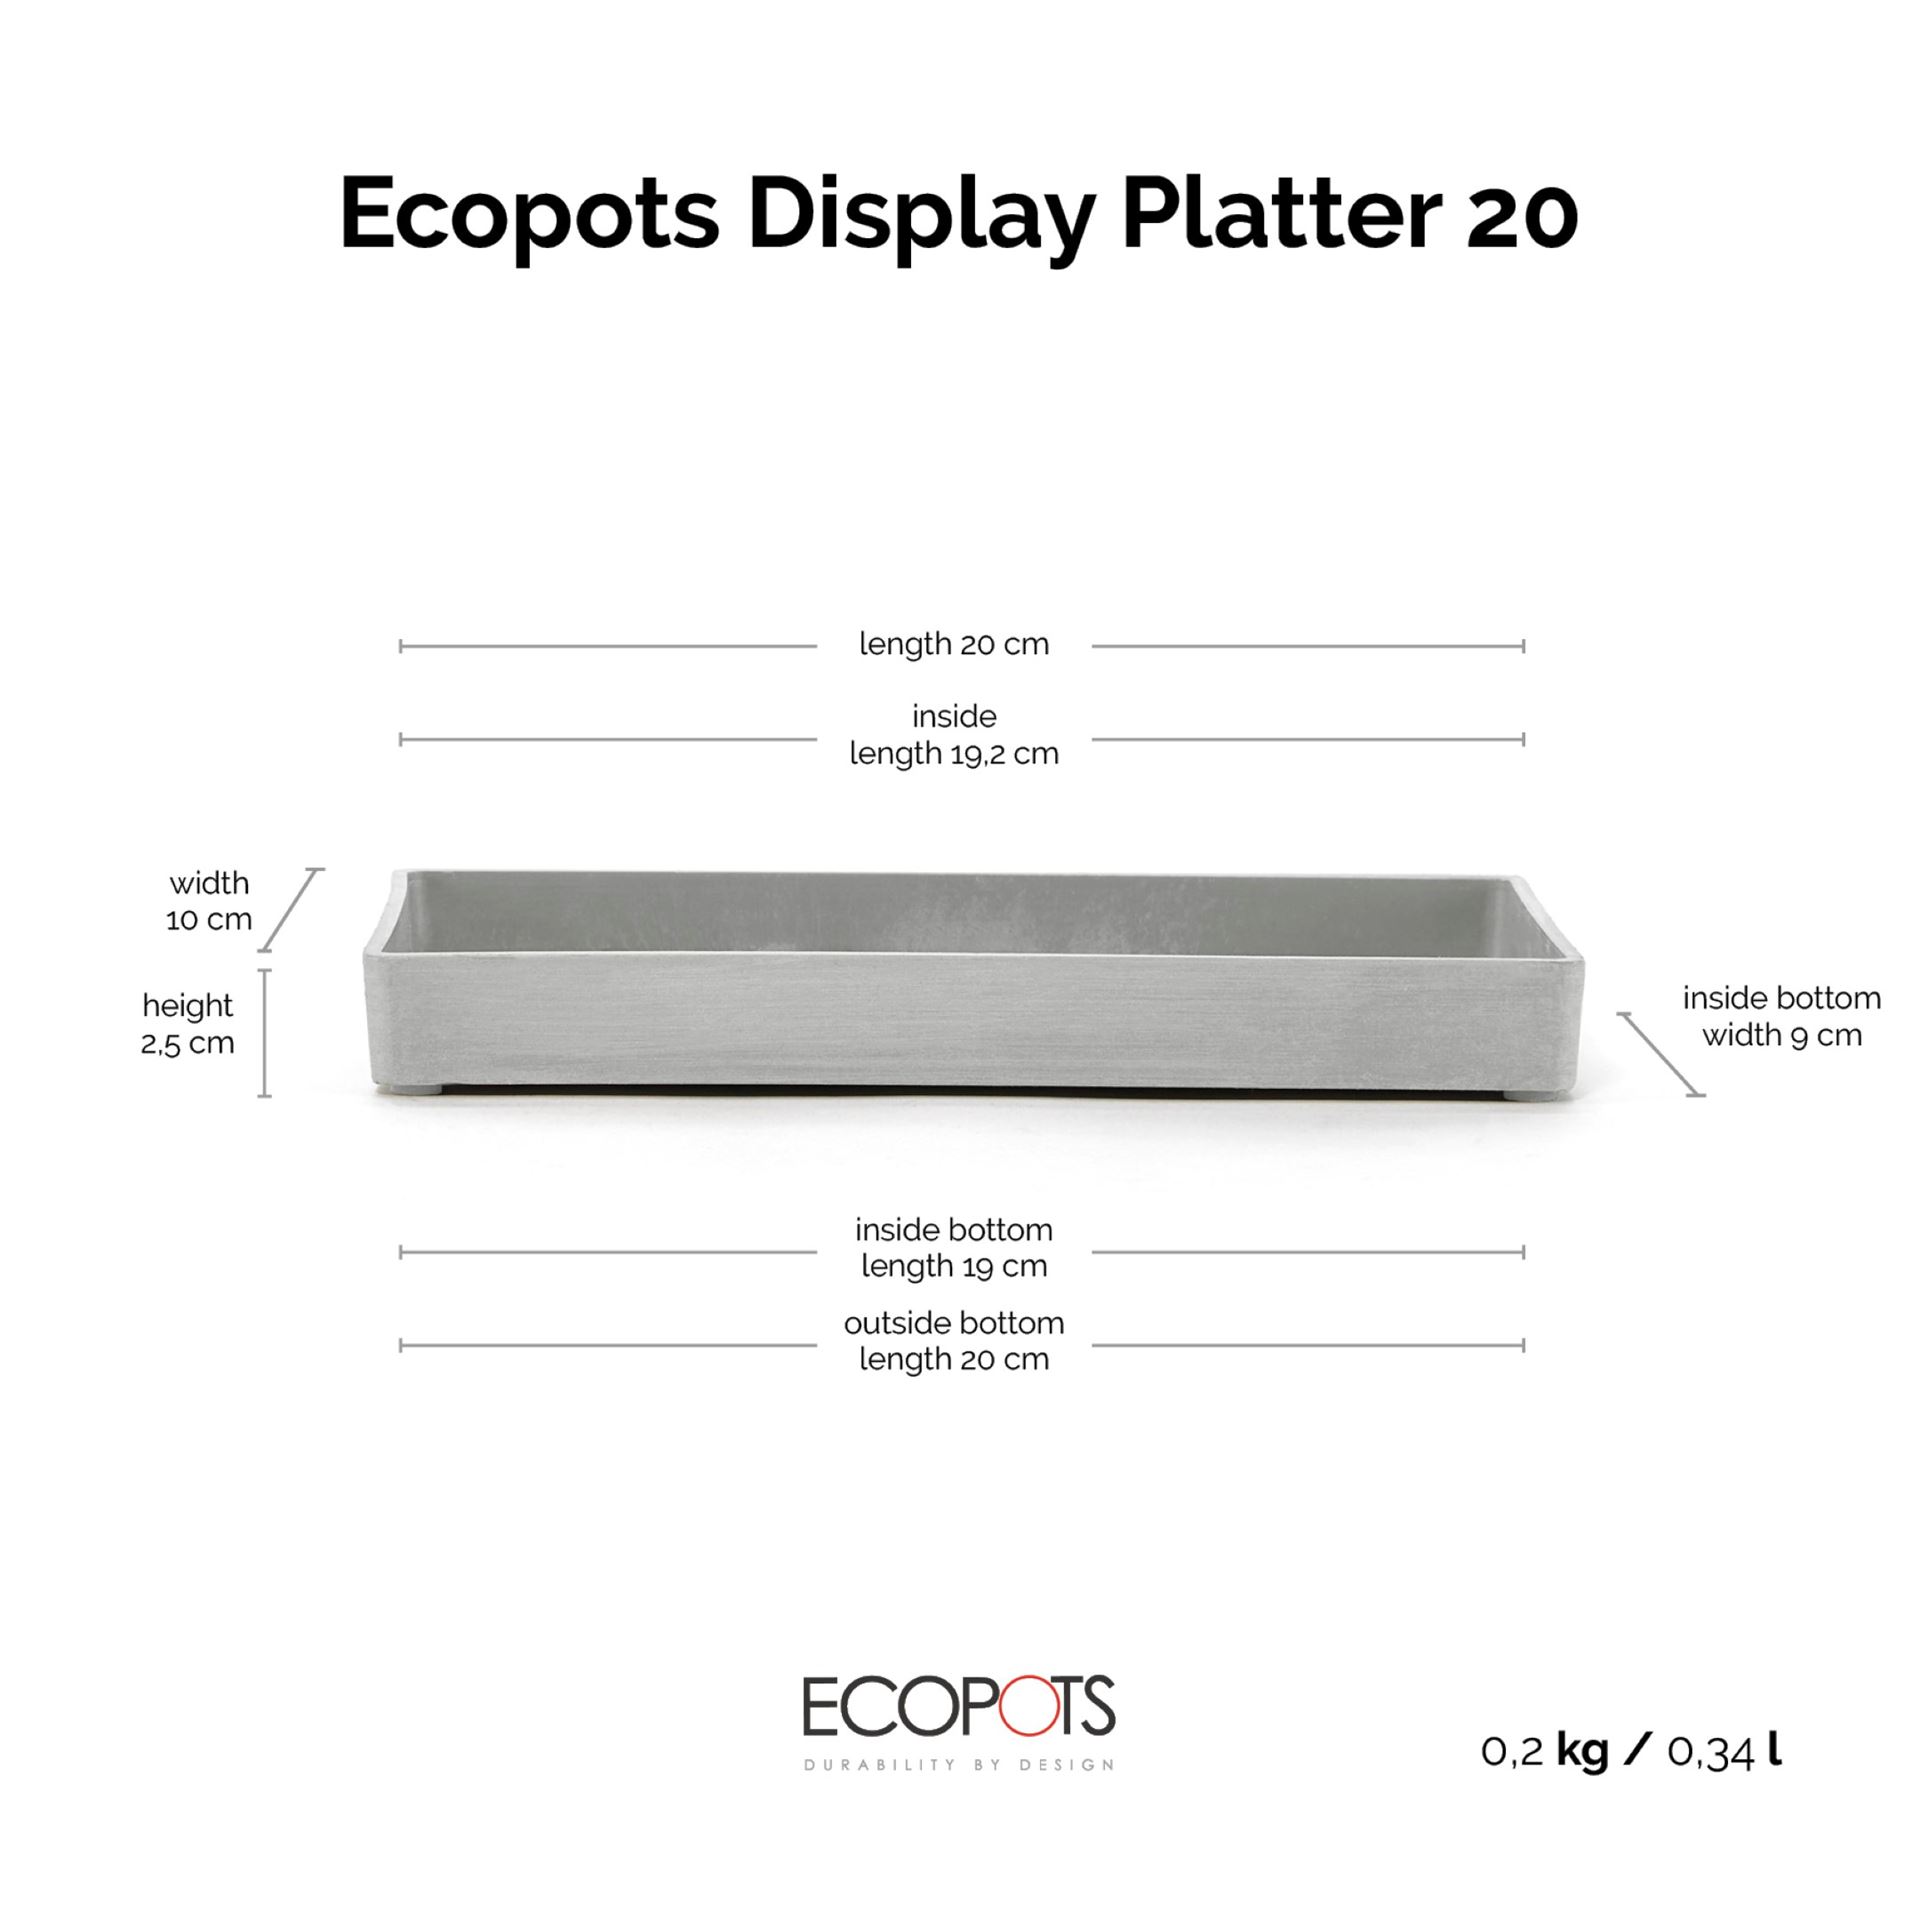 Ecopots-display-platter-white-grey-20-LBH-20x10x2-5-cm